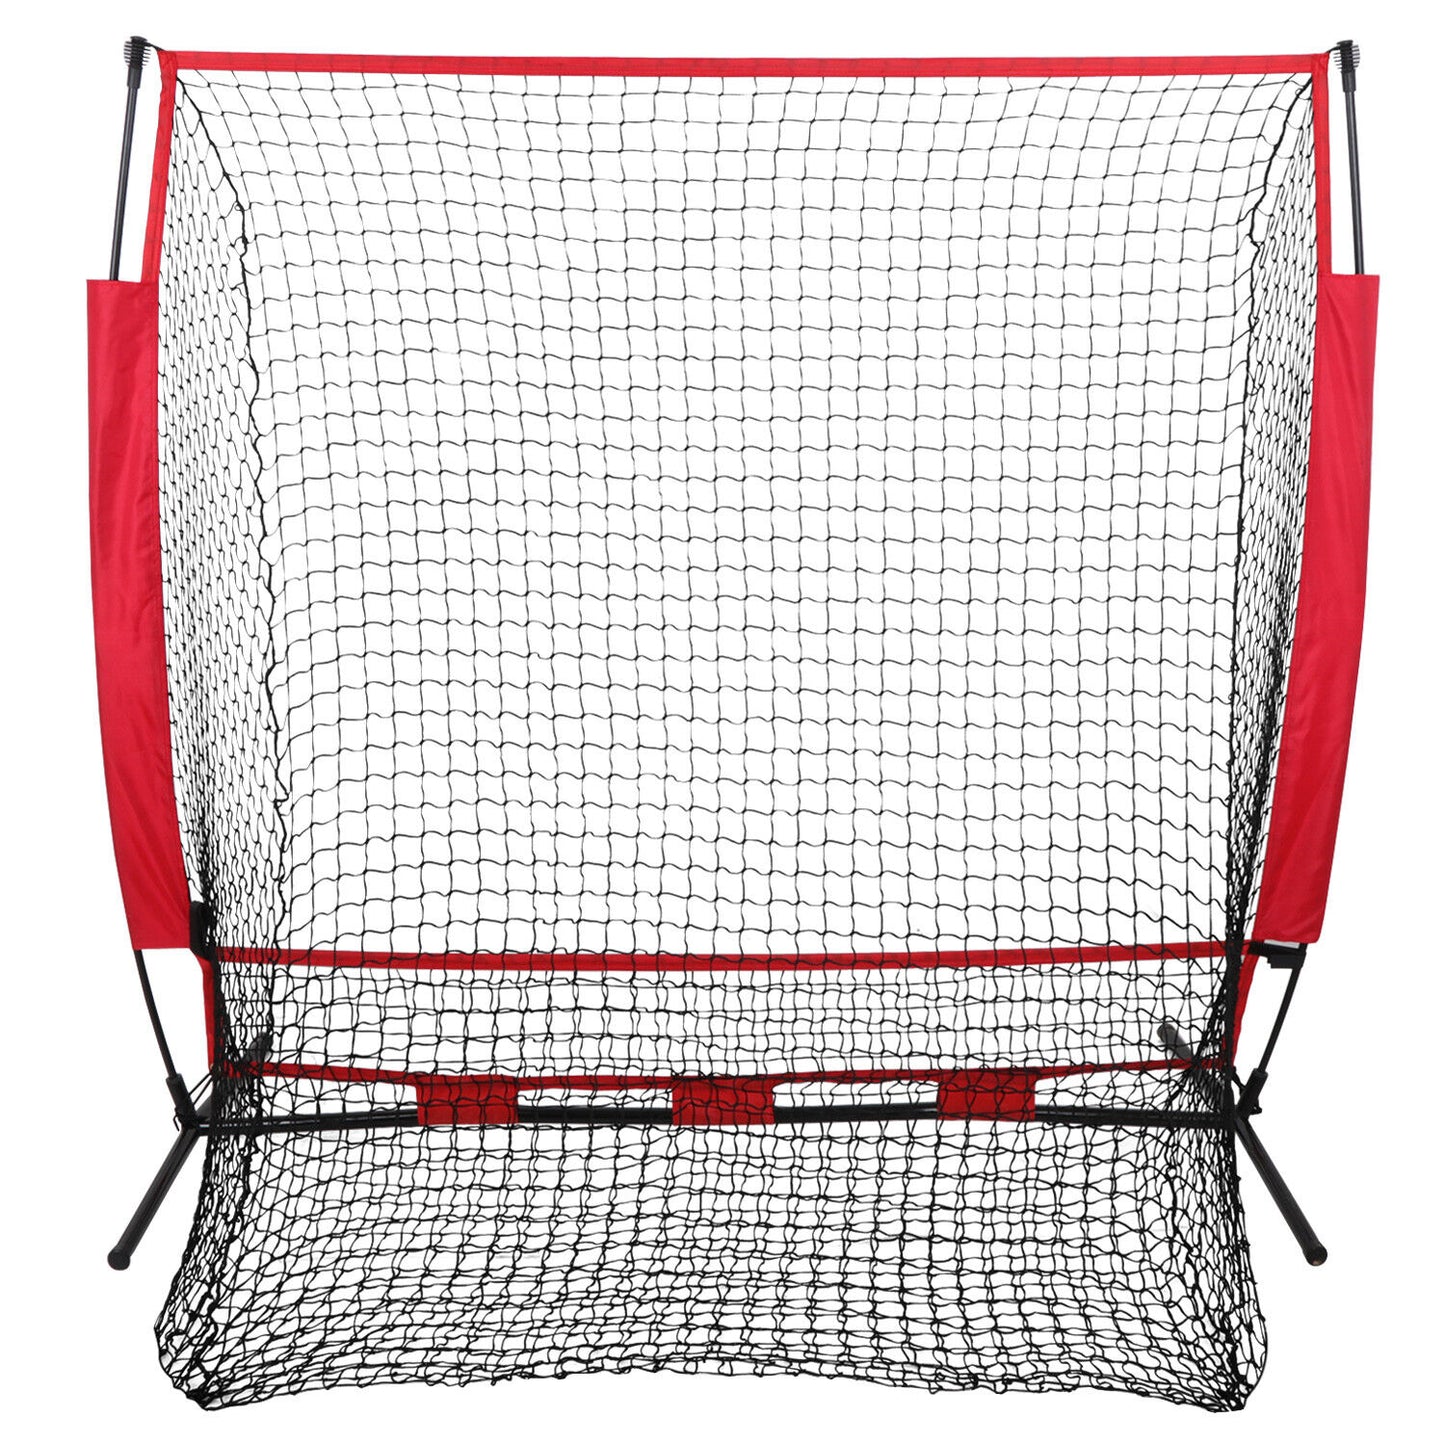 5'×5' Baseball Practice Net Batting Tee Softball Training Hitting W/Bag Ez Setup